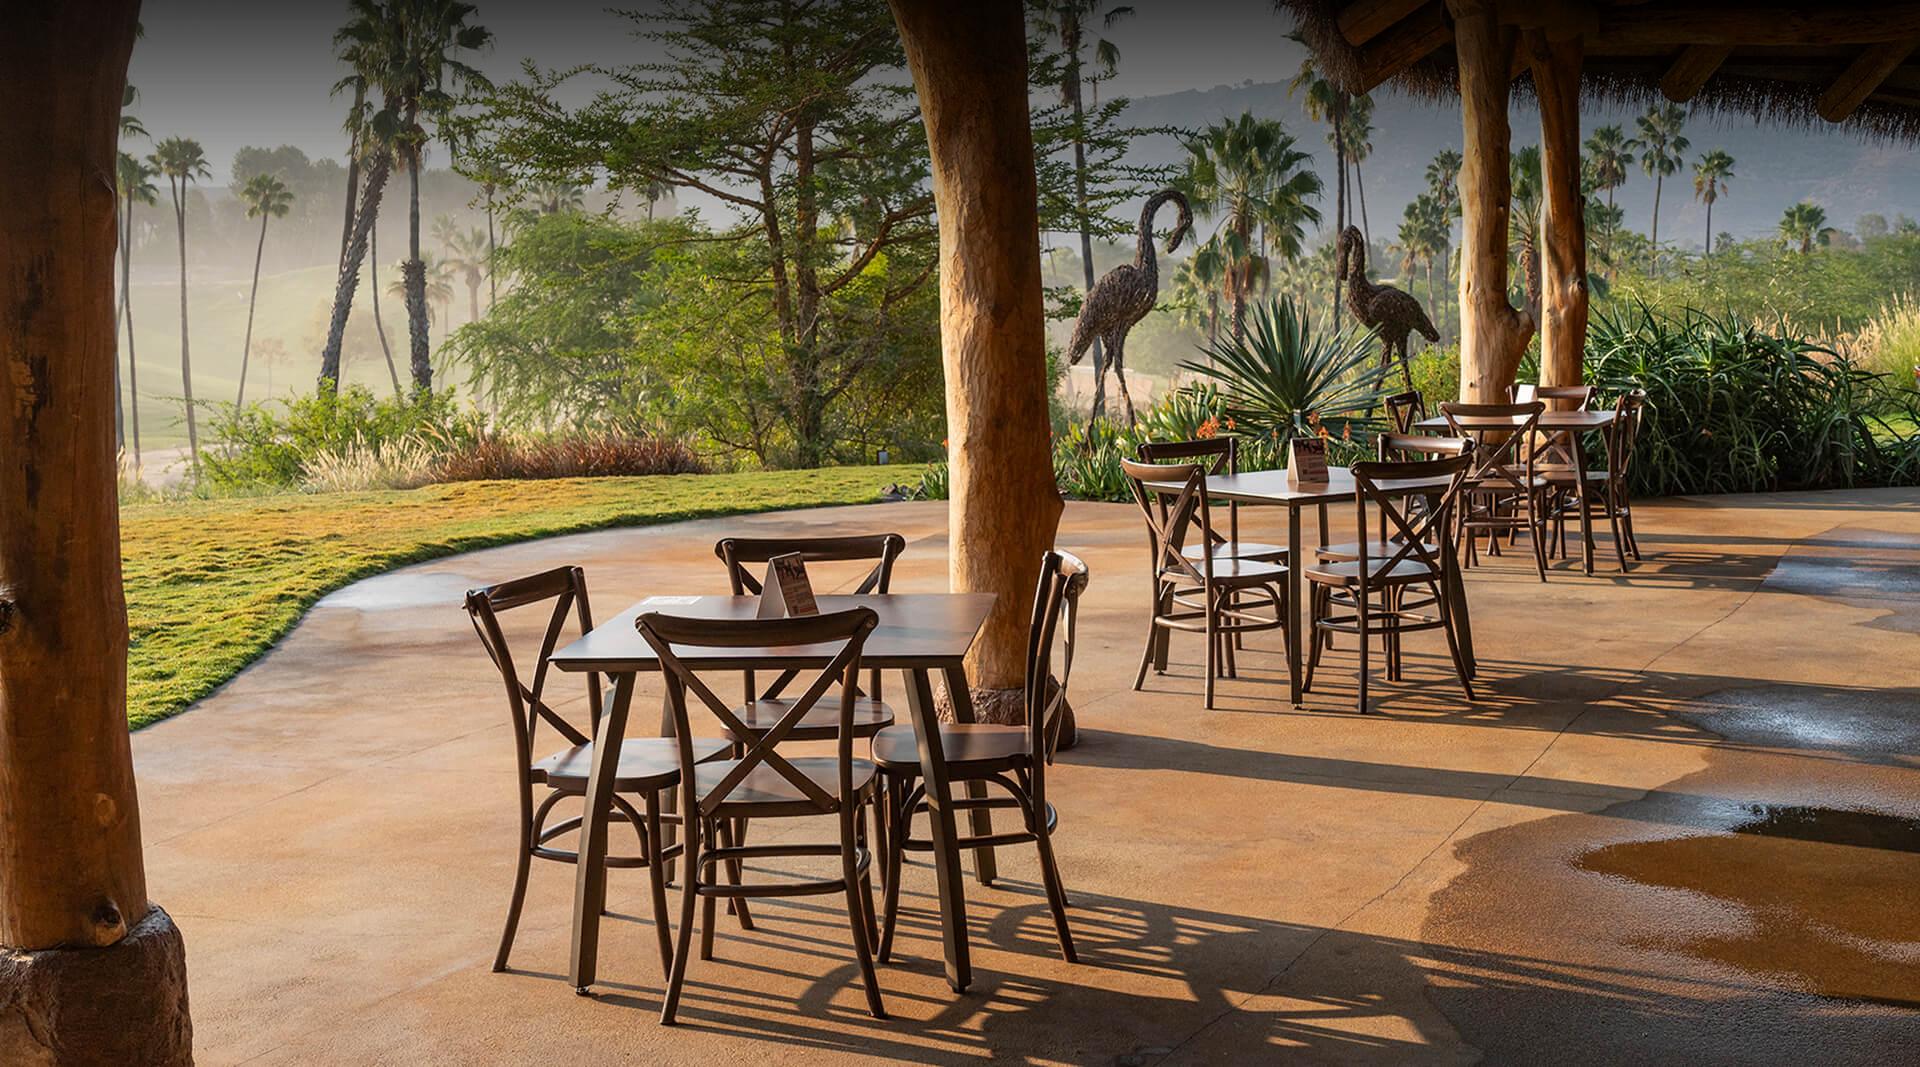 san diego safari park restaurant reservations